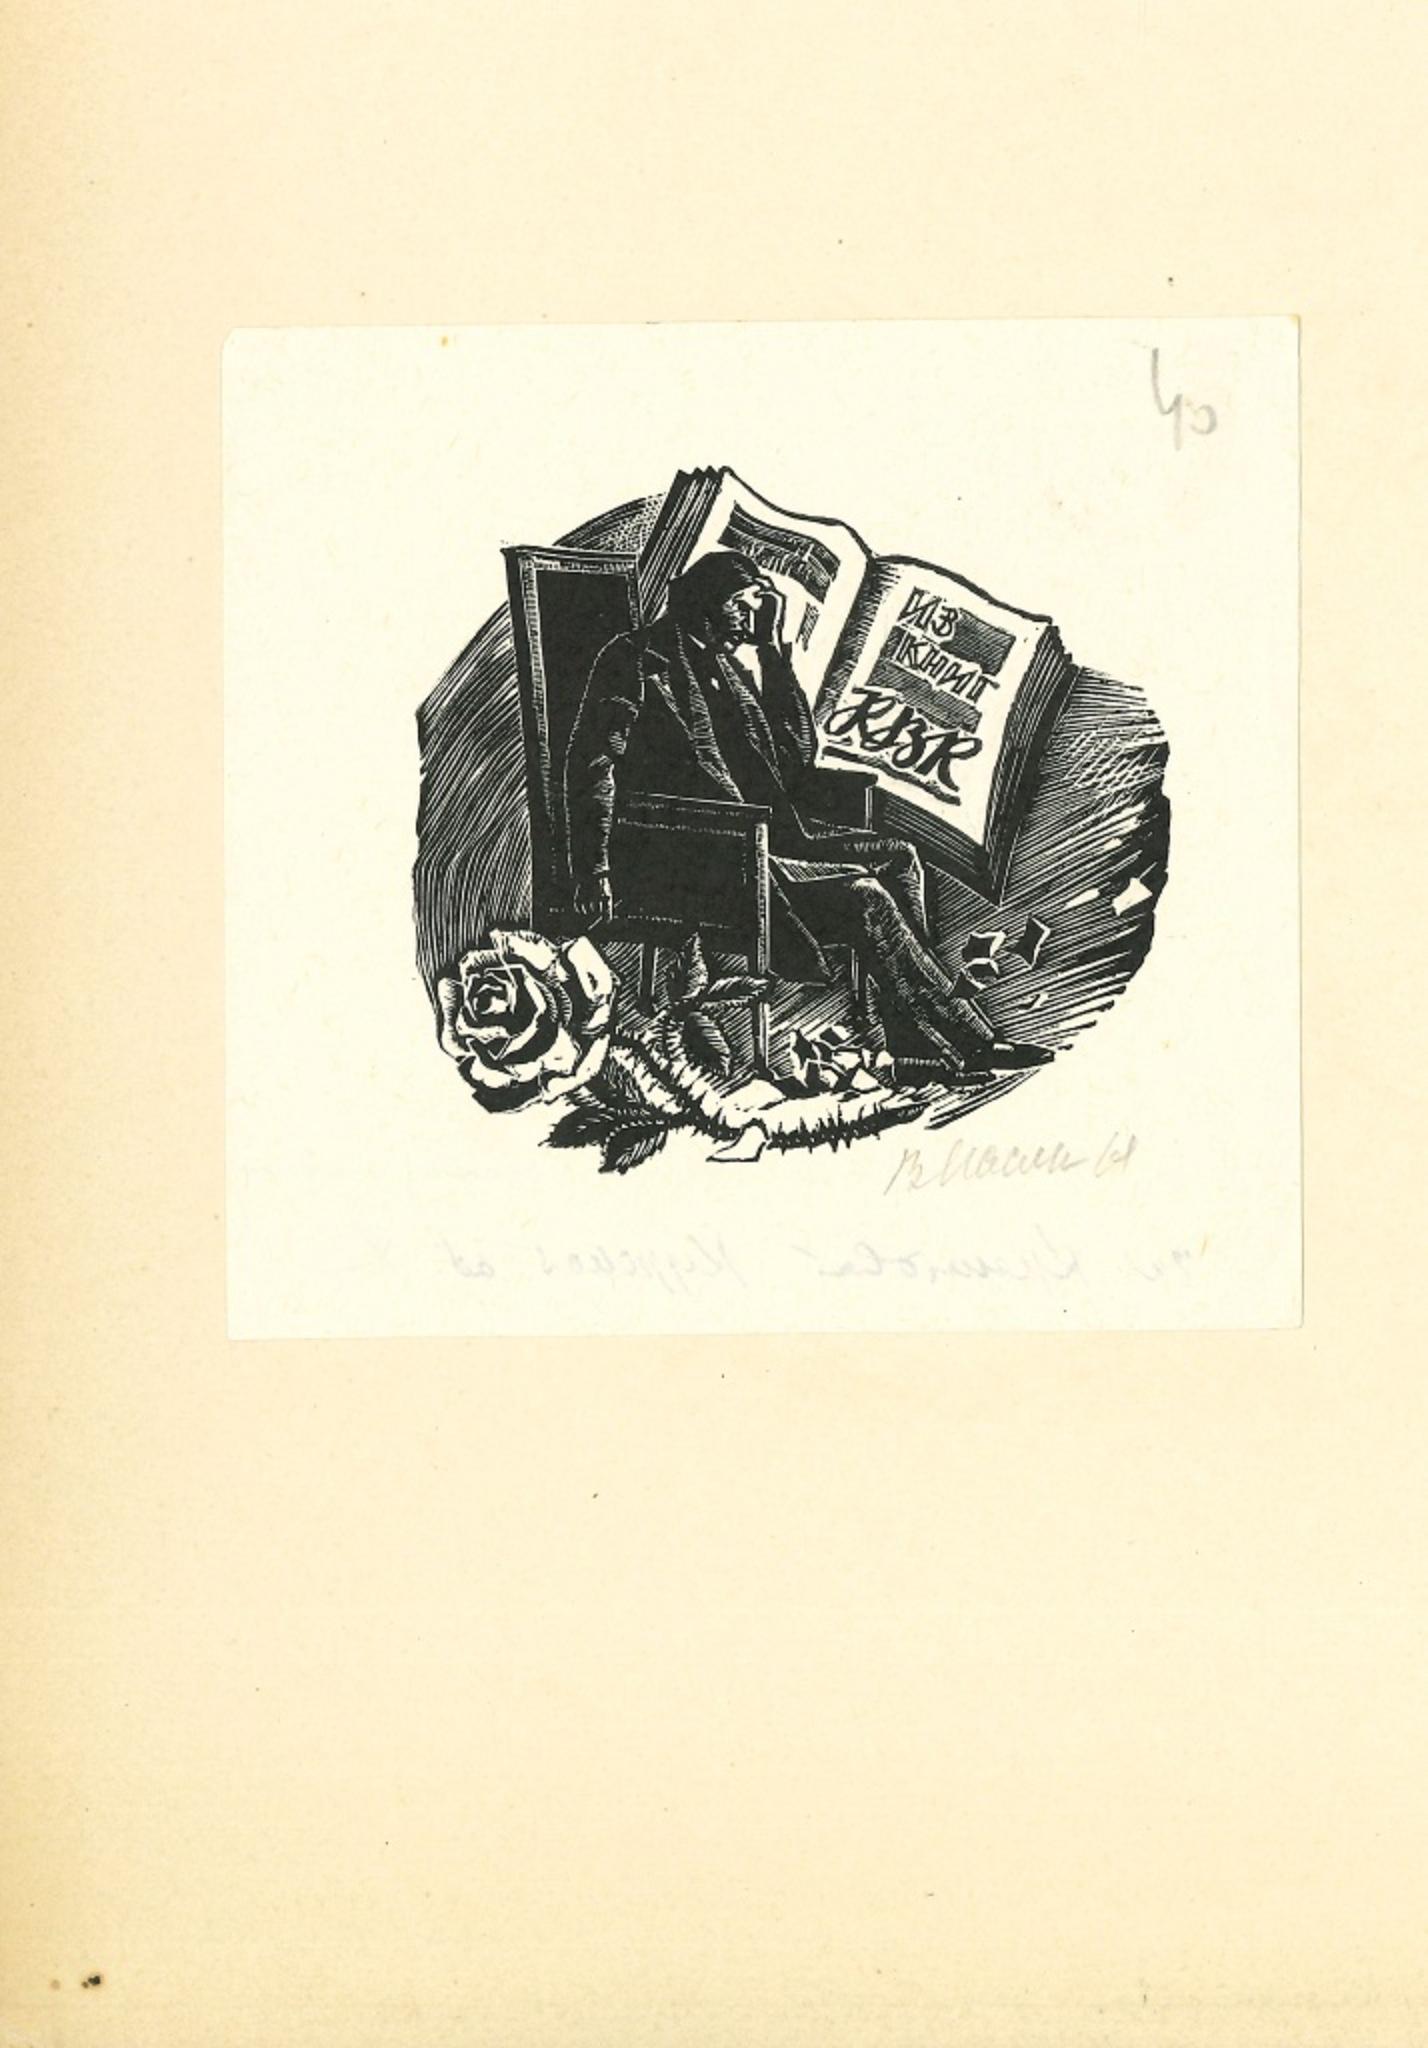 Unknown Figurative Print - Ex Libris RBR - Original Woodcut Print - Mid-20th Century